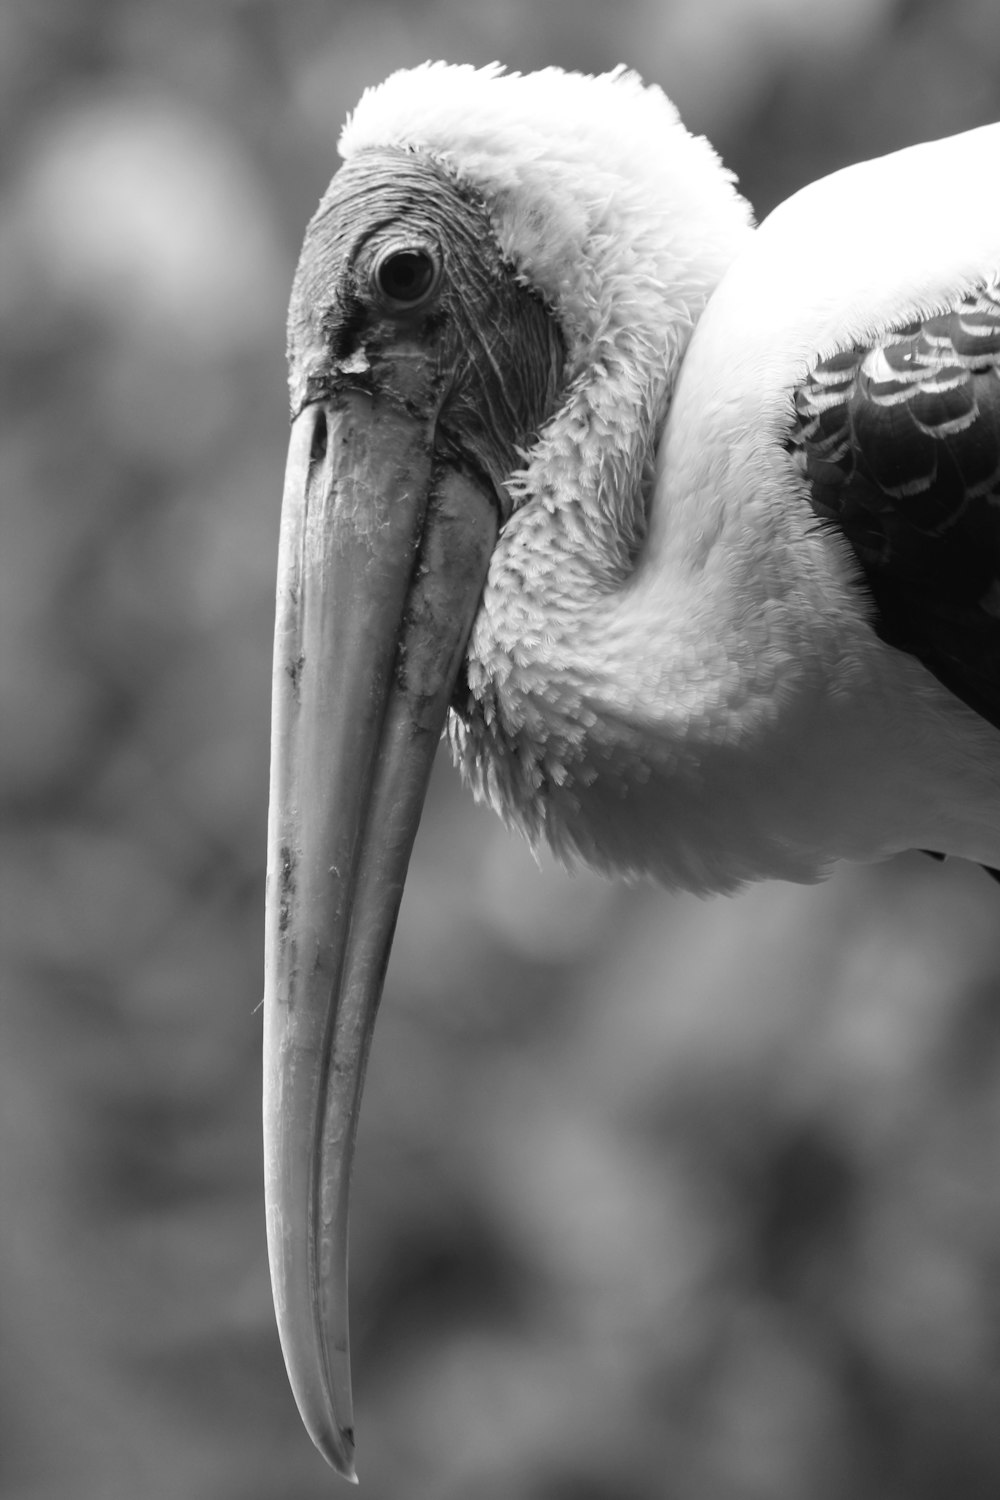 grayscale photo of a bird